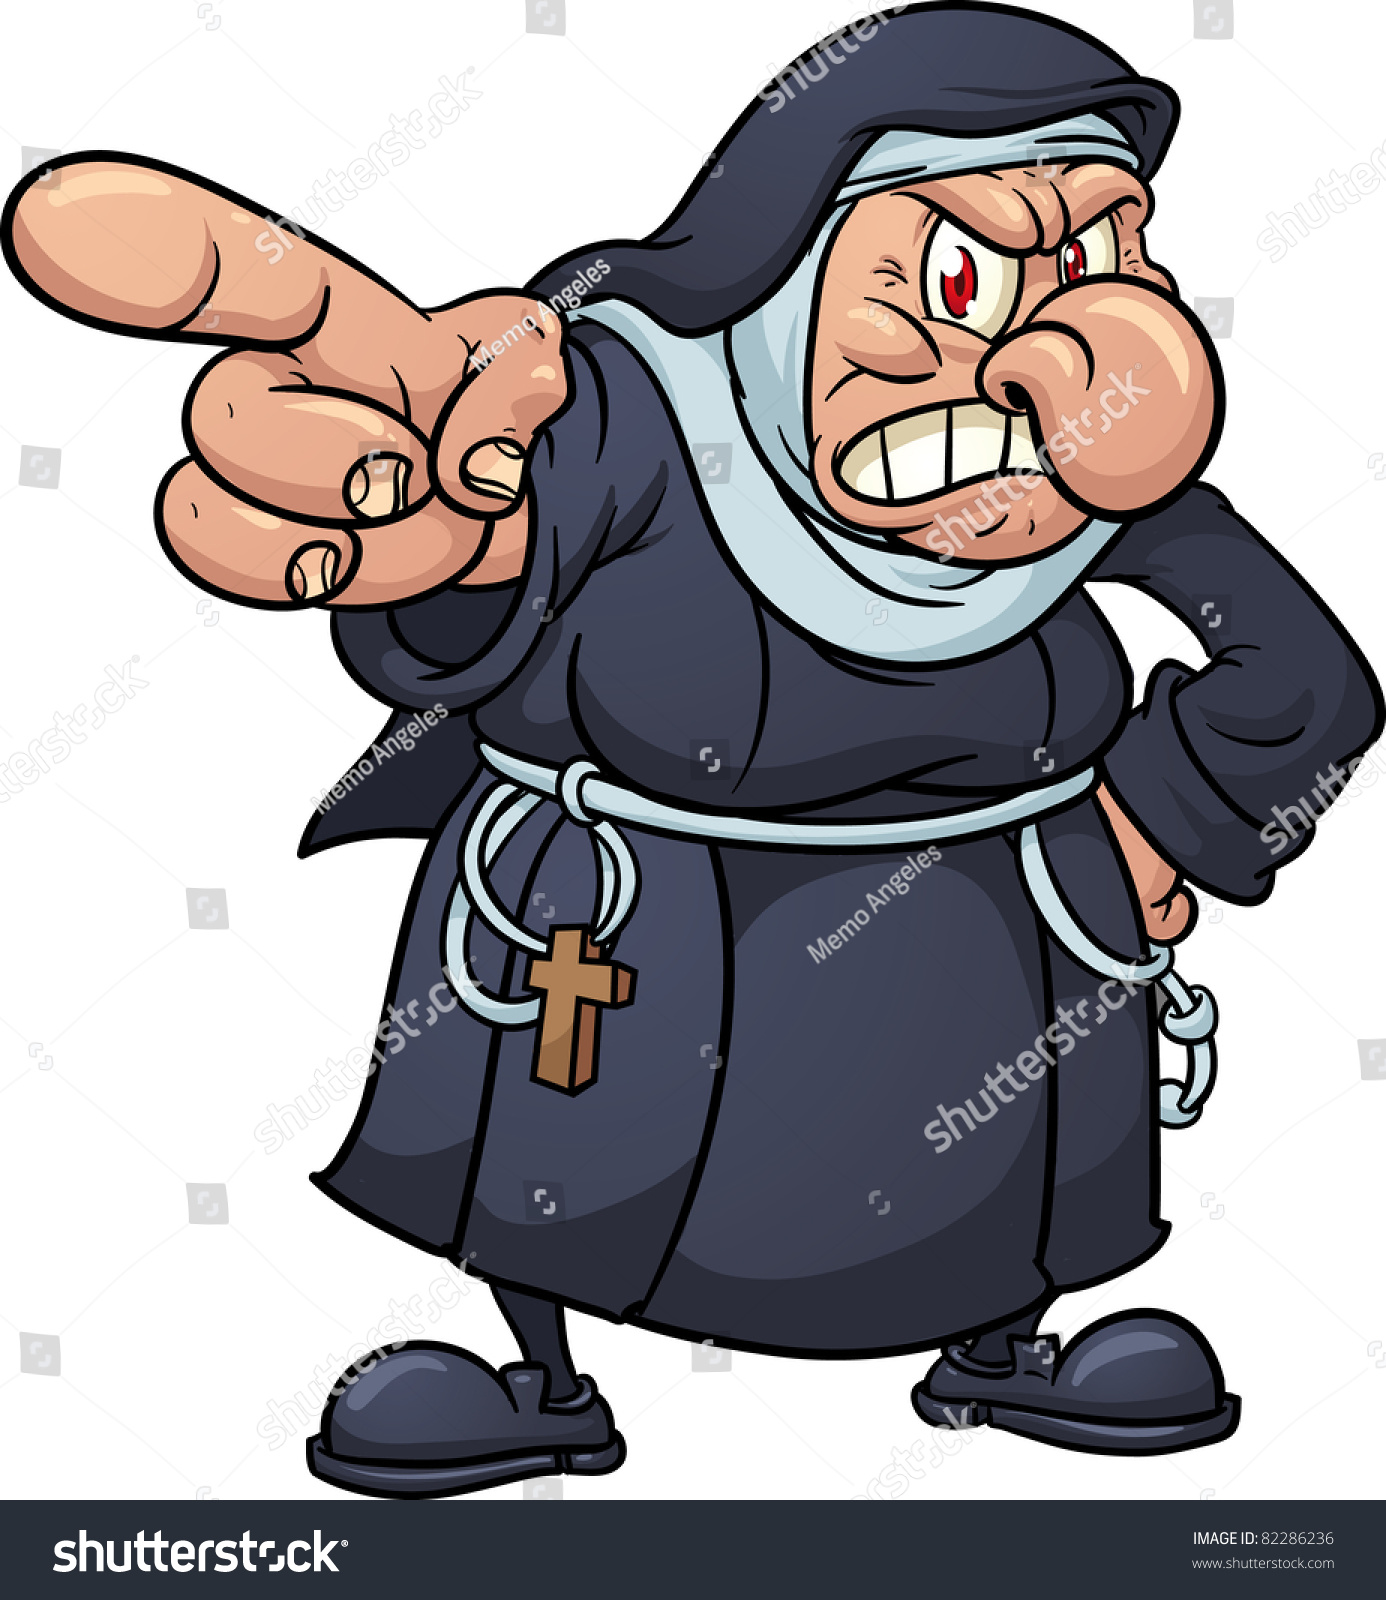 Angry Cartoon Nun Pointing Finger Vector Stock Vector Royalty Free 82286236